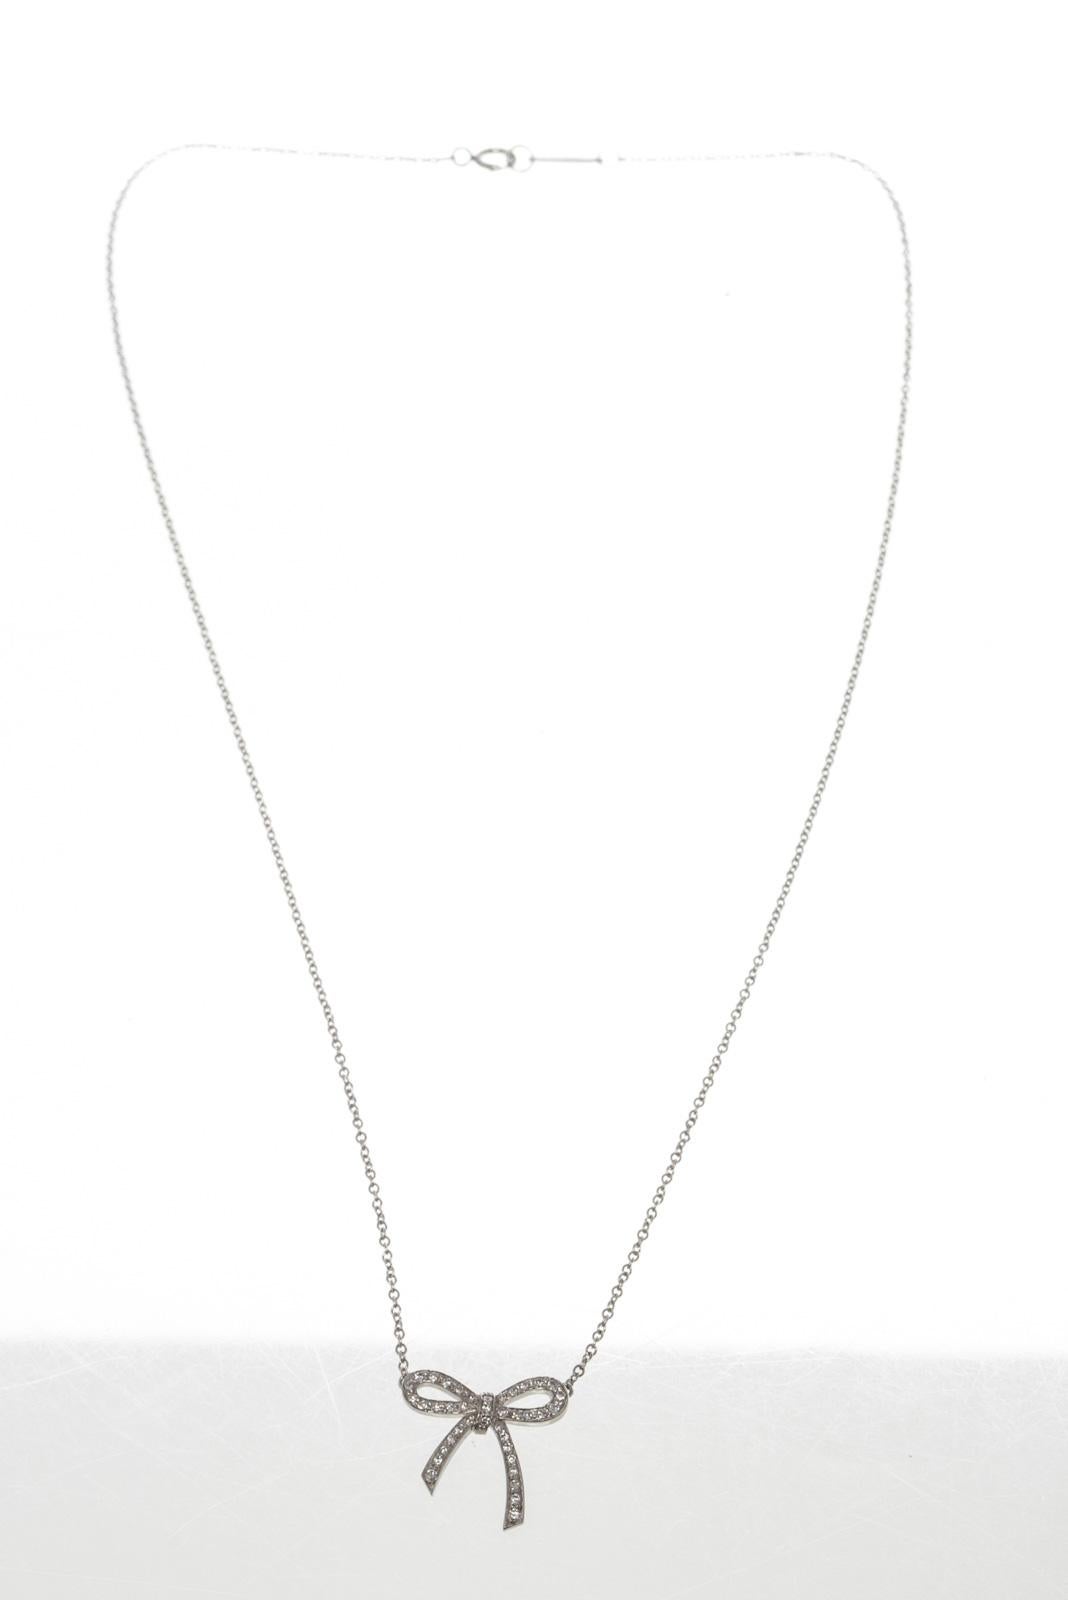 Tiffany & Co. Silver Bow Pendant Necklace withÂ silver-toneÂ hardware.

52969MSCÂ Â